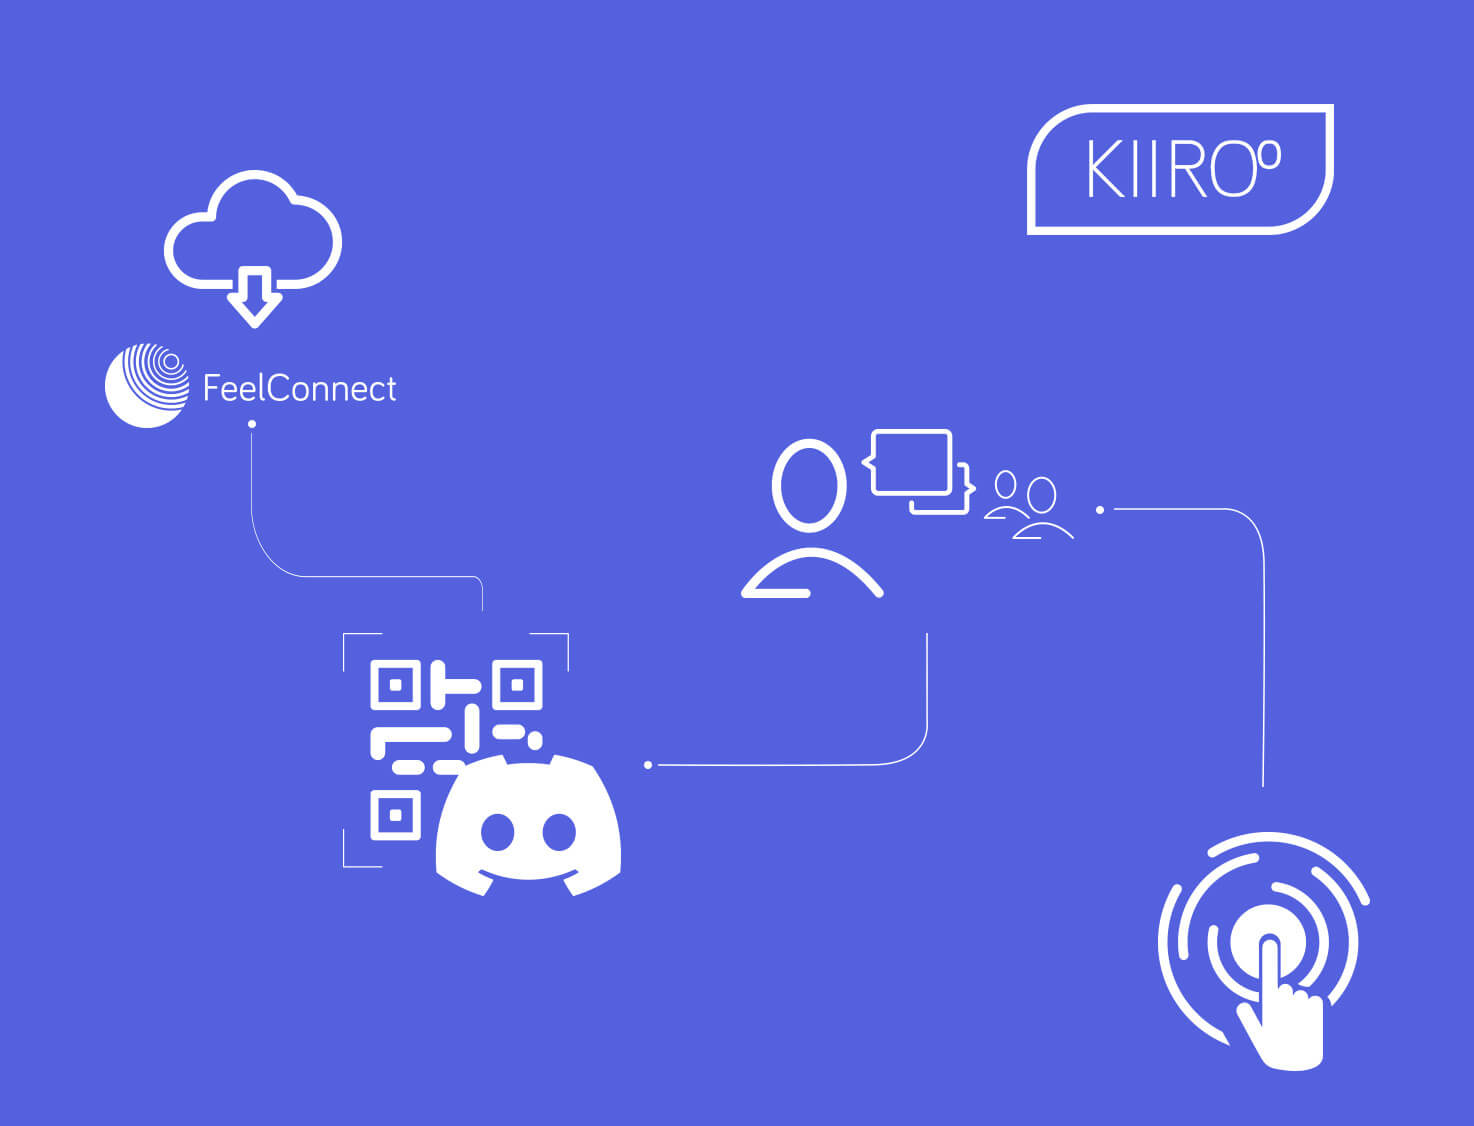 KEON by KIIROO - The Future is Here on Vimeo